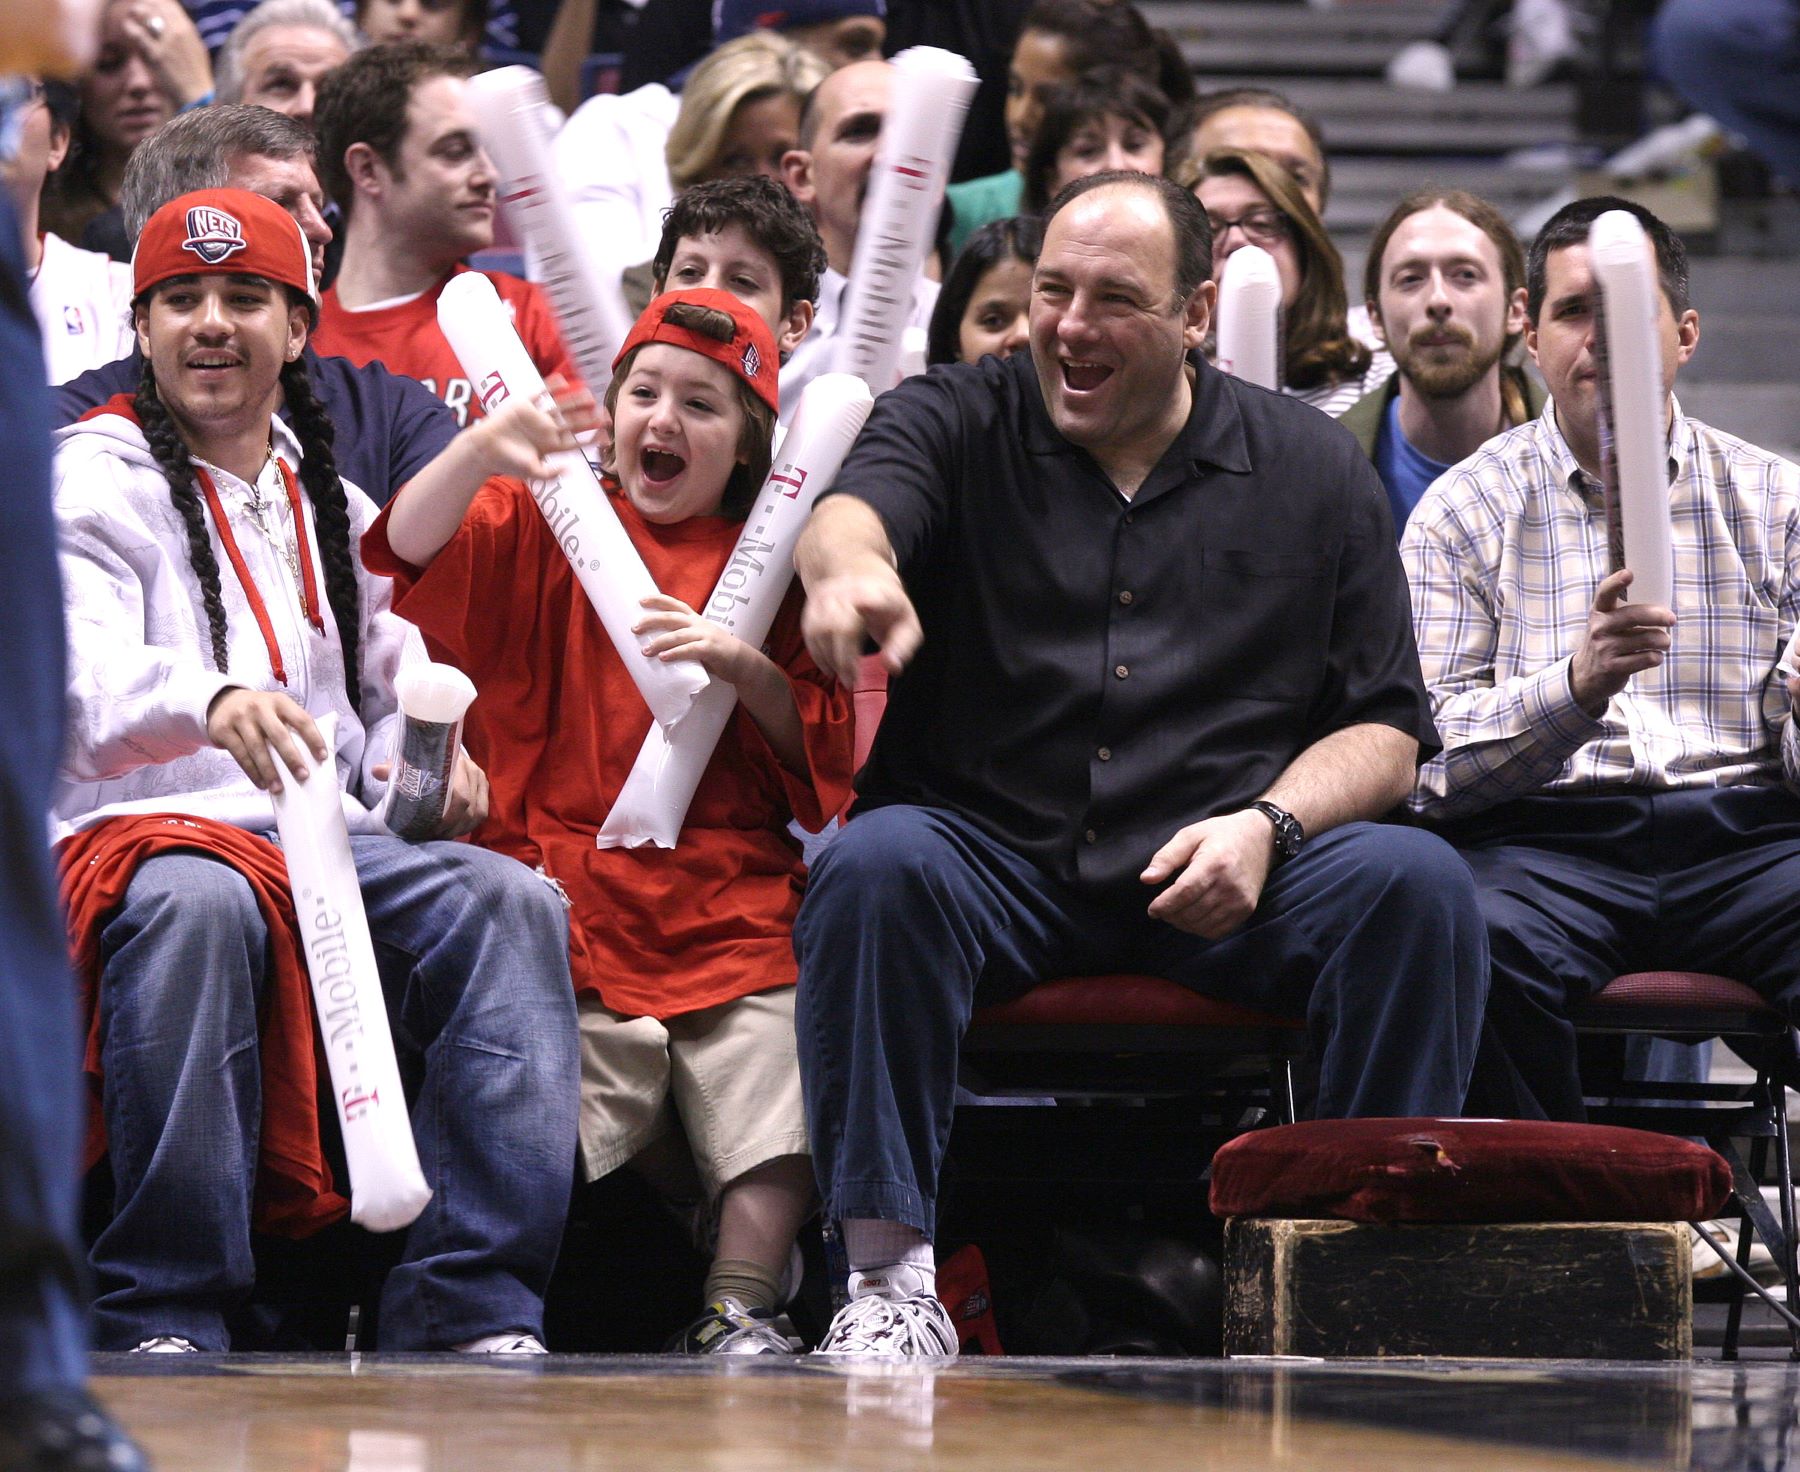 James Gandolfini and his son Michael Gandolfini at a Toronto Raptors and New Jersey Nets game at the Continental Arena